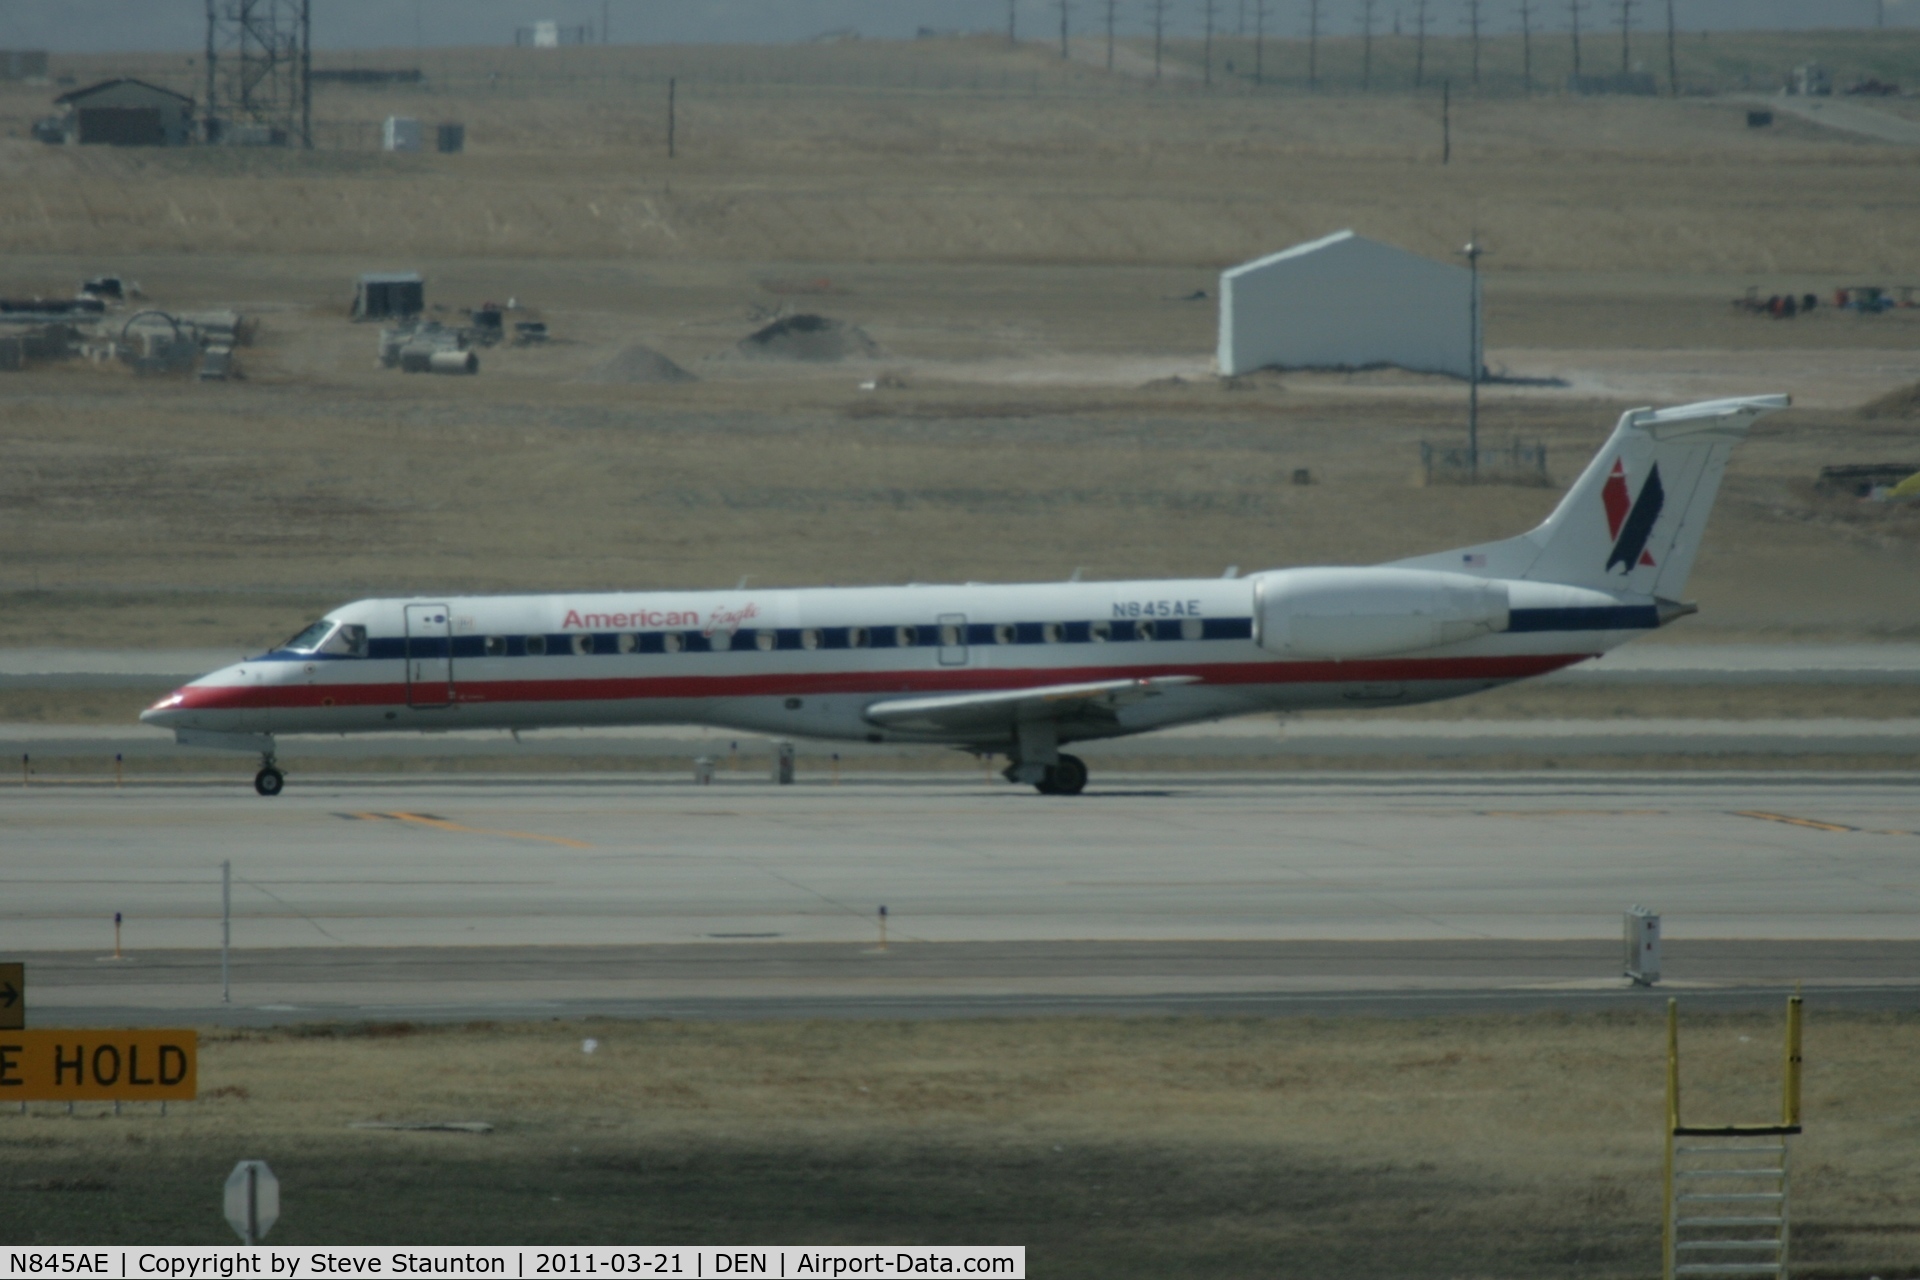 N845AE, 2003 Embraer ERJ-140LR (EMB-135KL) C/N 145685, Taken at Denver International Airport, in March 2011 whilst on an Aeroprint Aviation tour